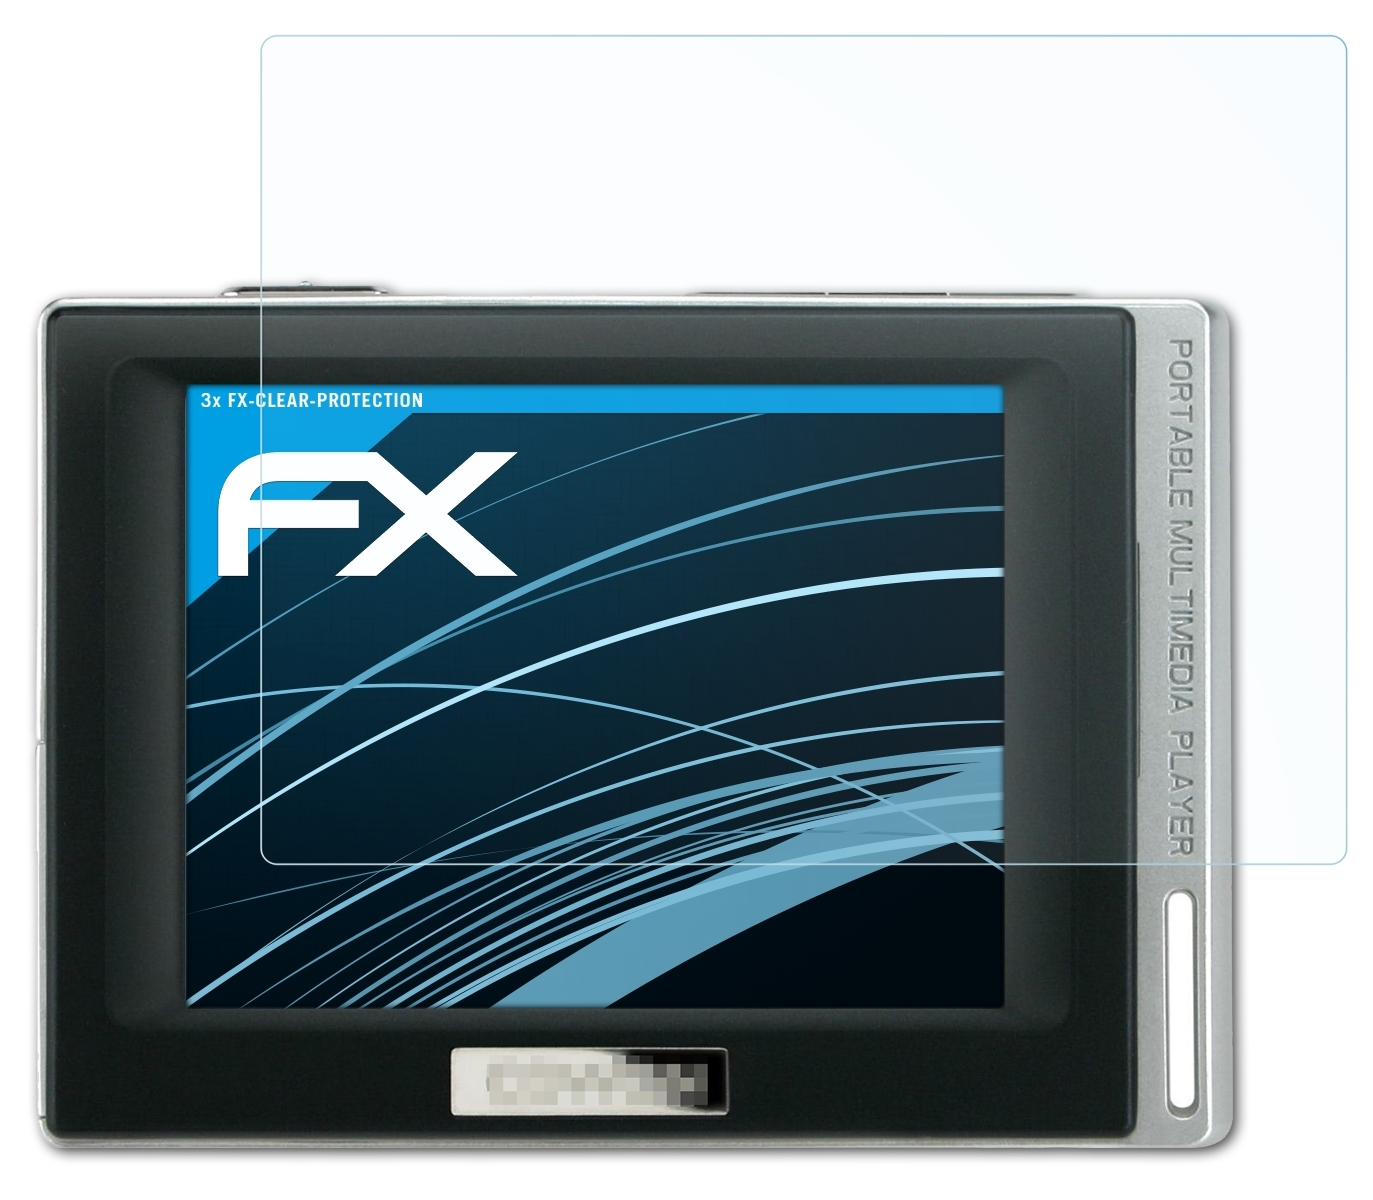 ATFOLIX 3x FX-Clear Cowon D2 DAB) Displayschutz(für